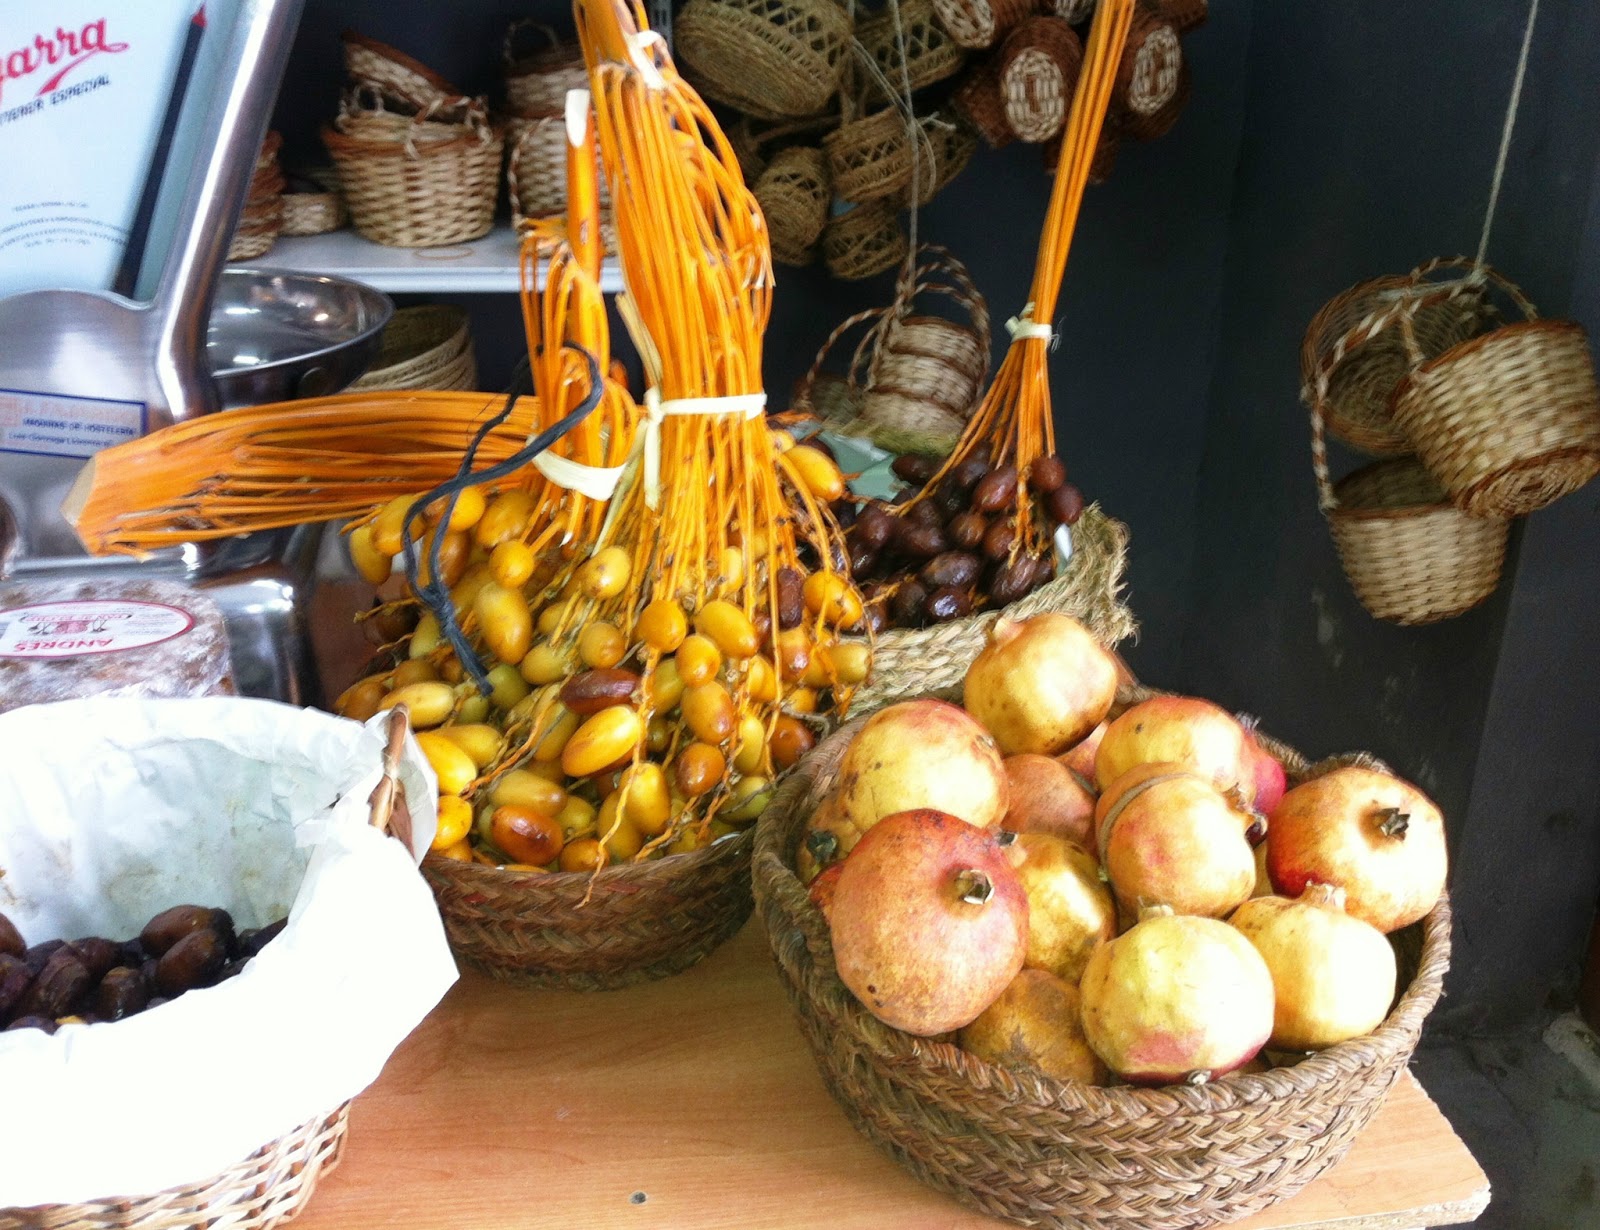 Fig bread (pan de higo), dates and pomegranates